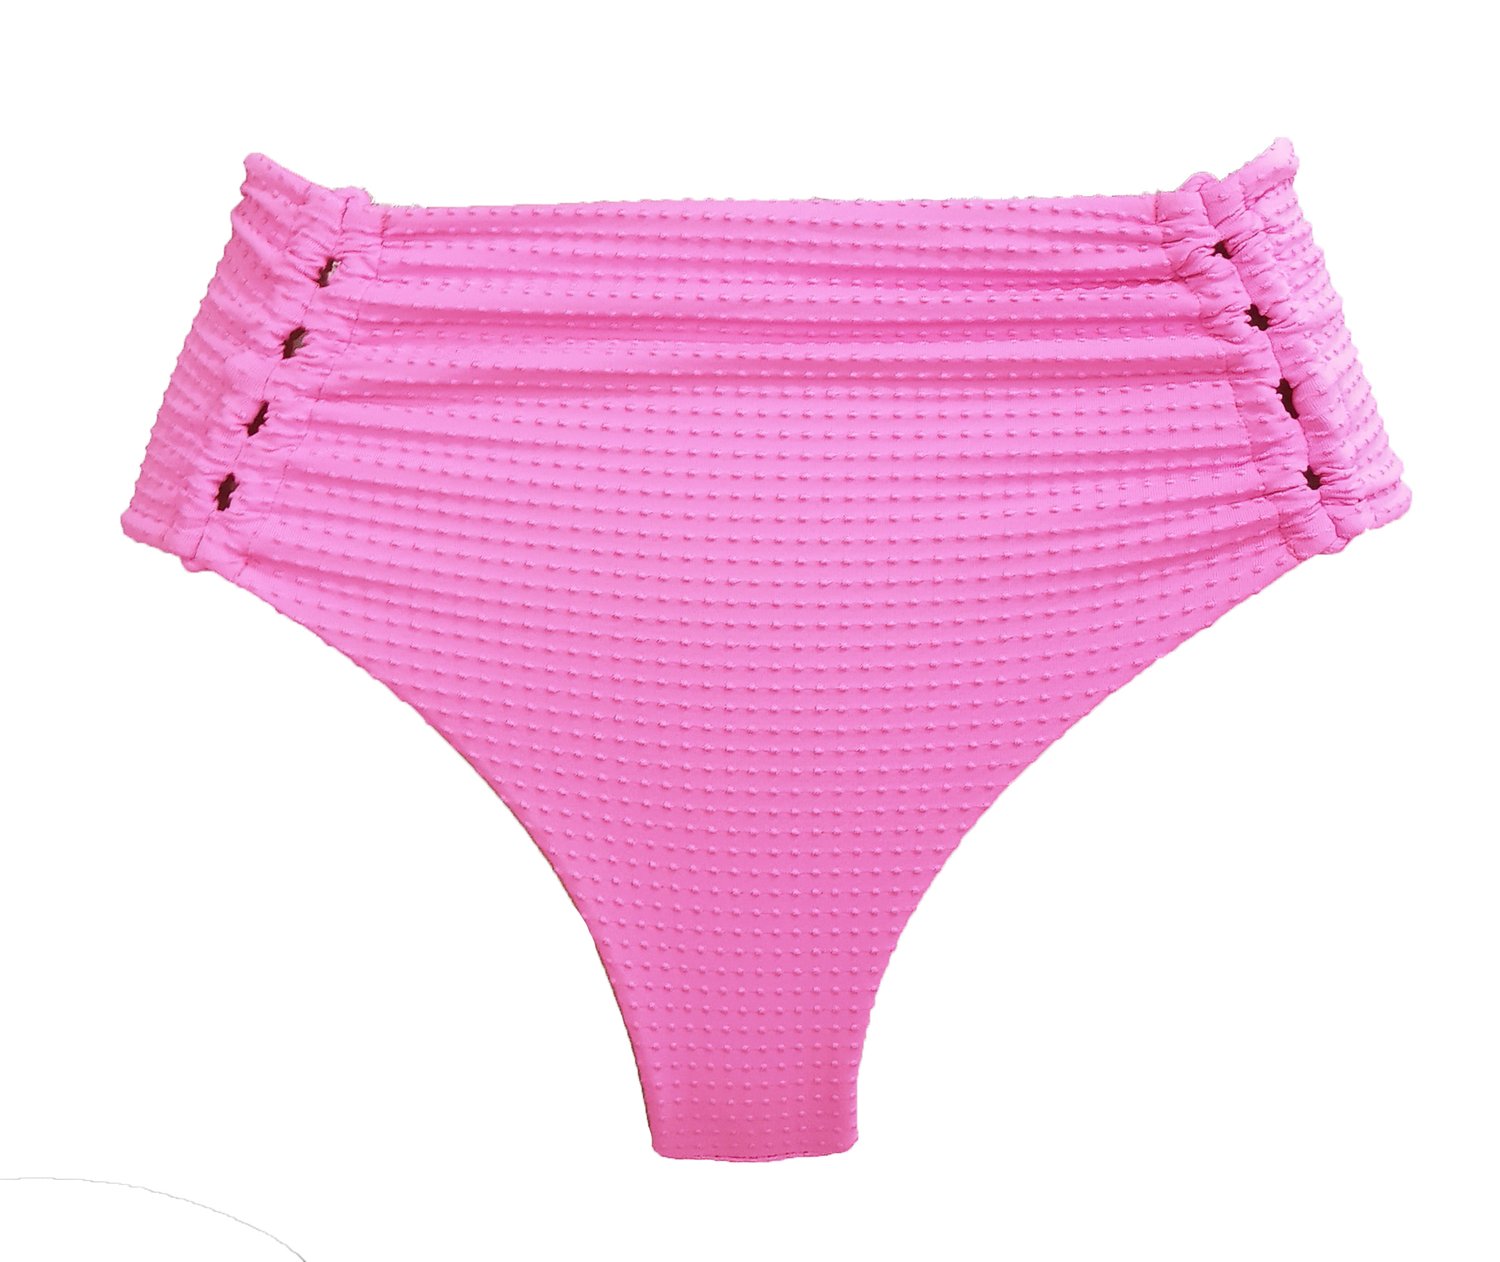 Hot Pants Com Detalhes Laterais Rosa Neon